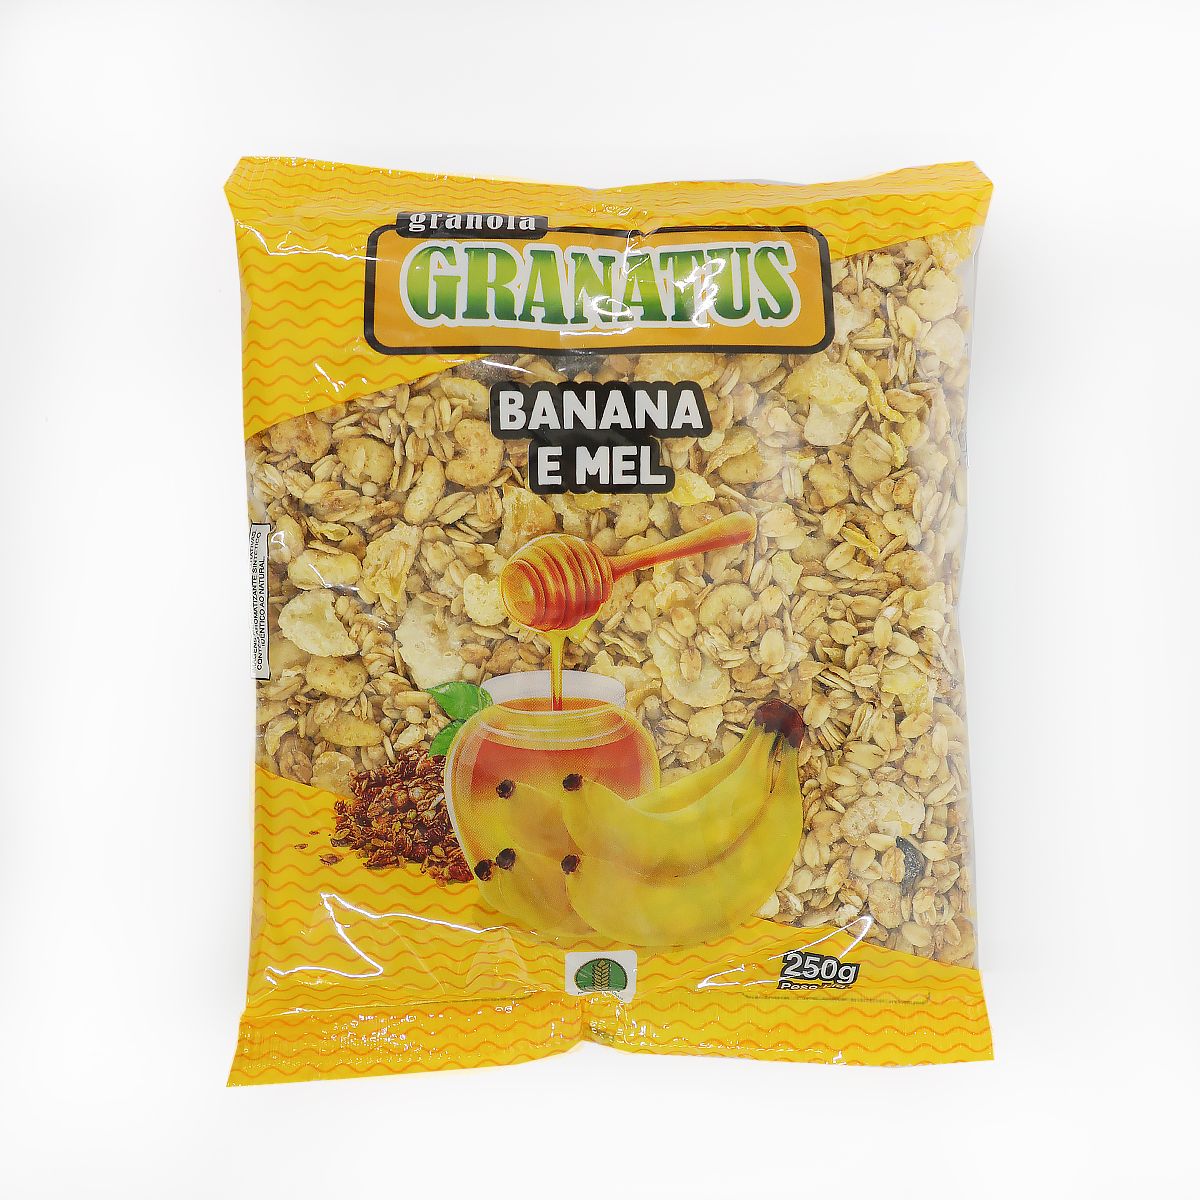 Granola Natus Granatus Banana e Mel 250g